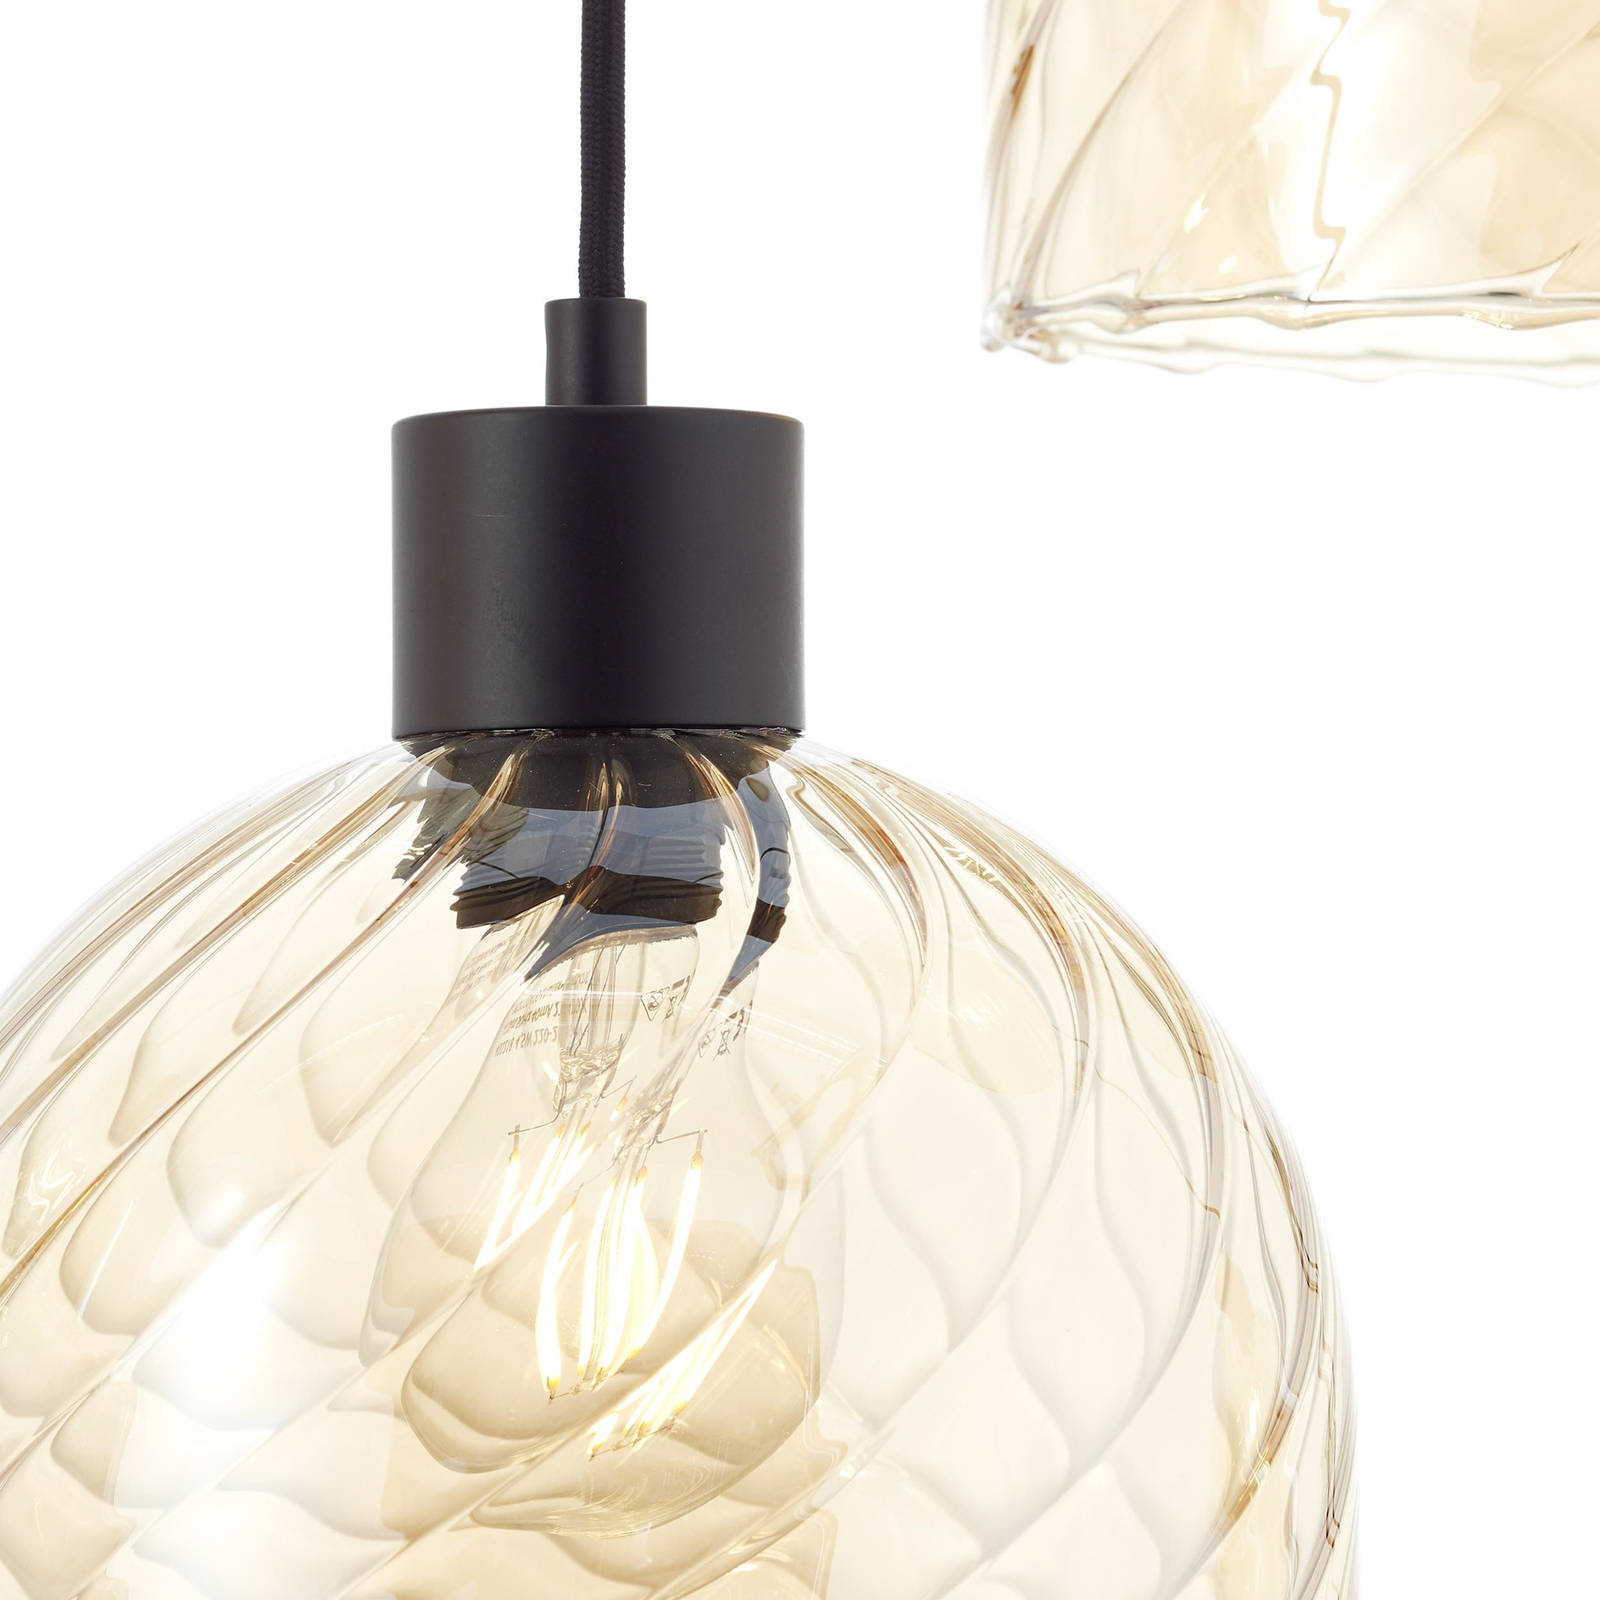 Casto hanging light, length 95 cm, amber, 6-bulb, glass